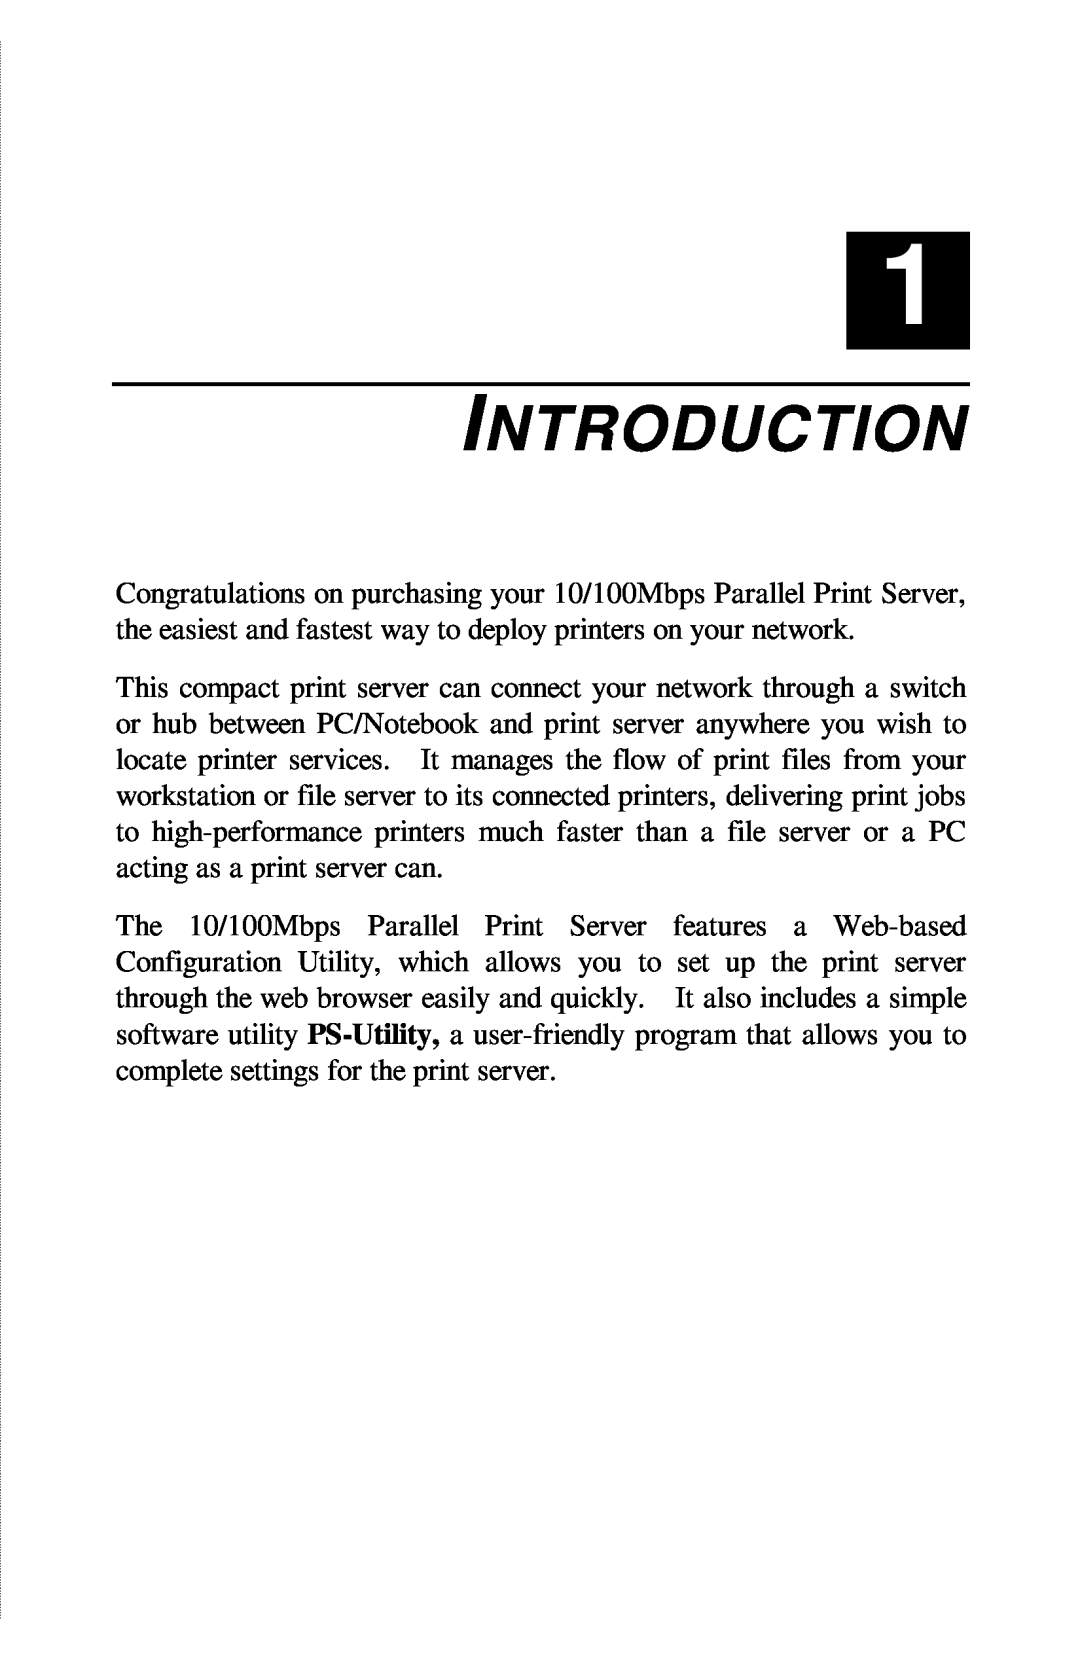 TRENDnet TE100-PIP manual Introduction 